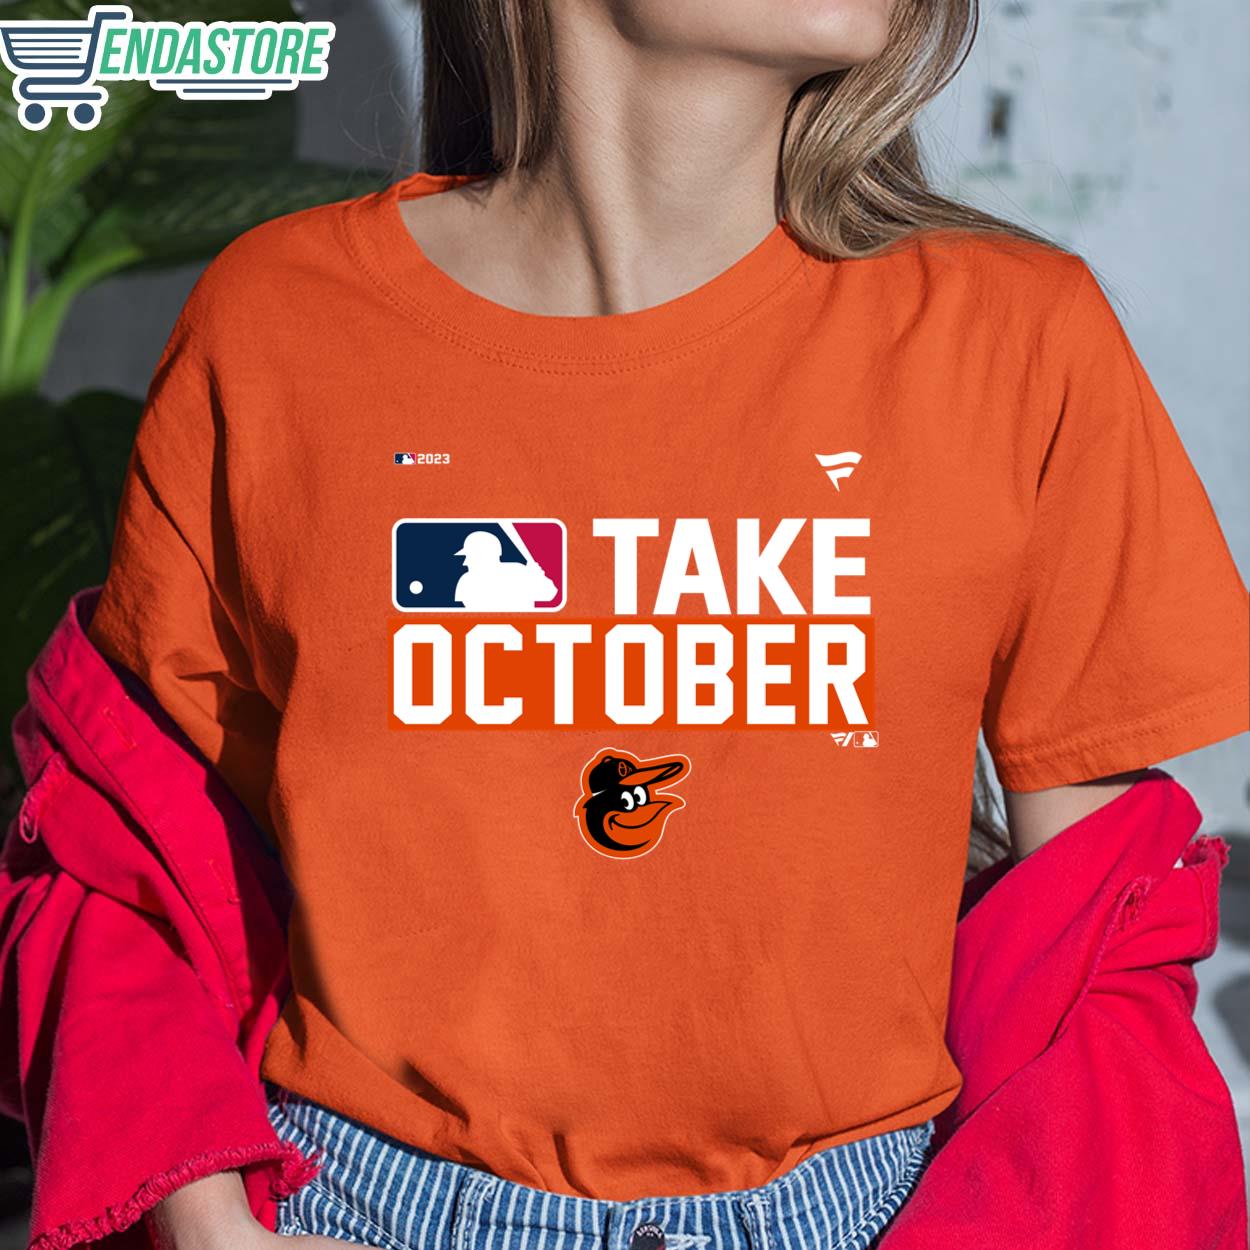 Endastore Kevin Cash Take October Orioles Sweatshirt